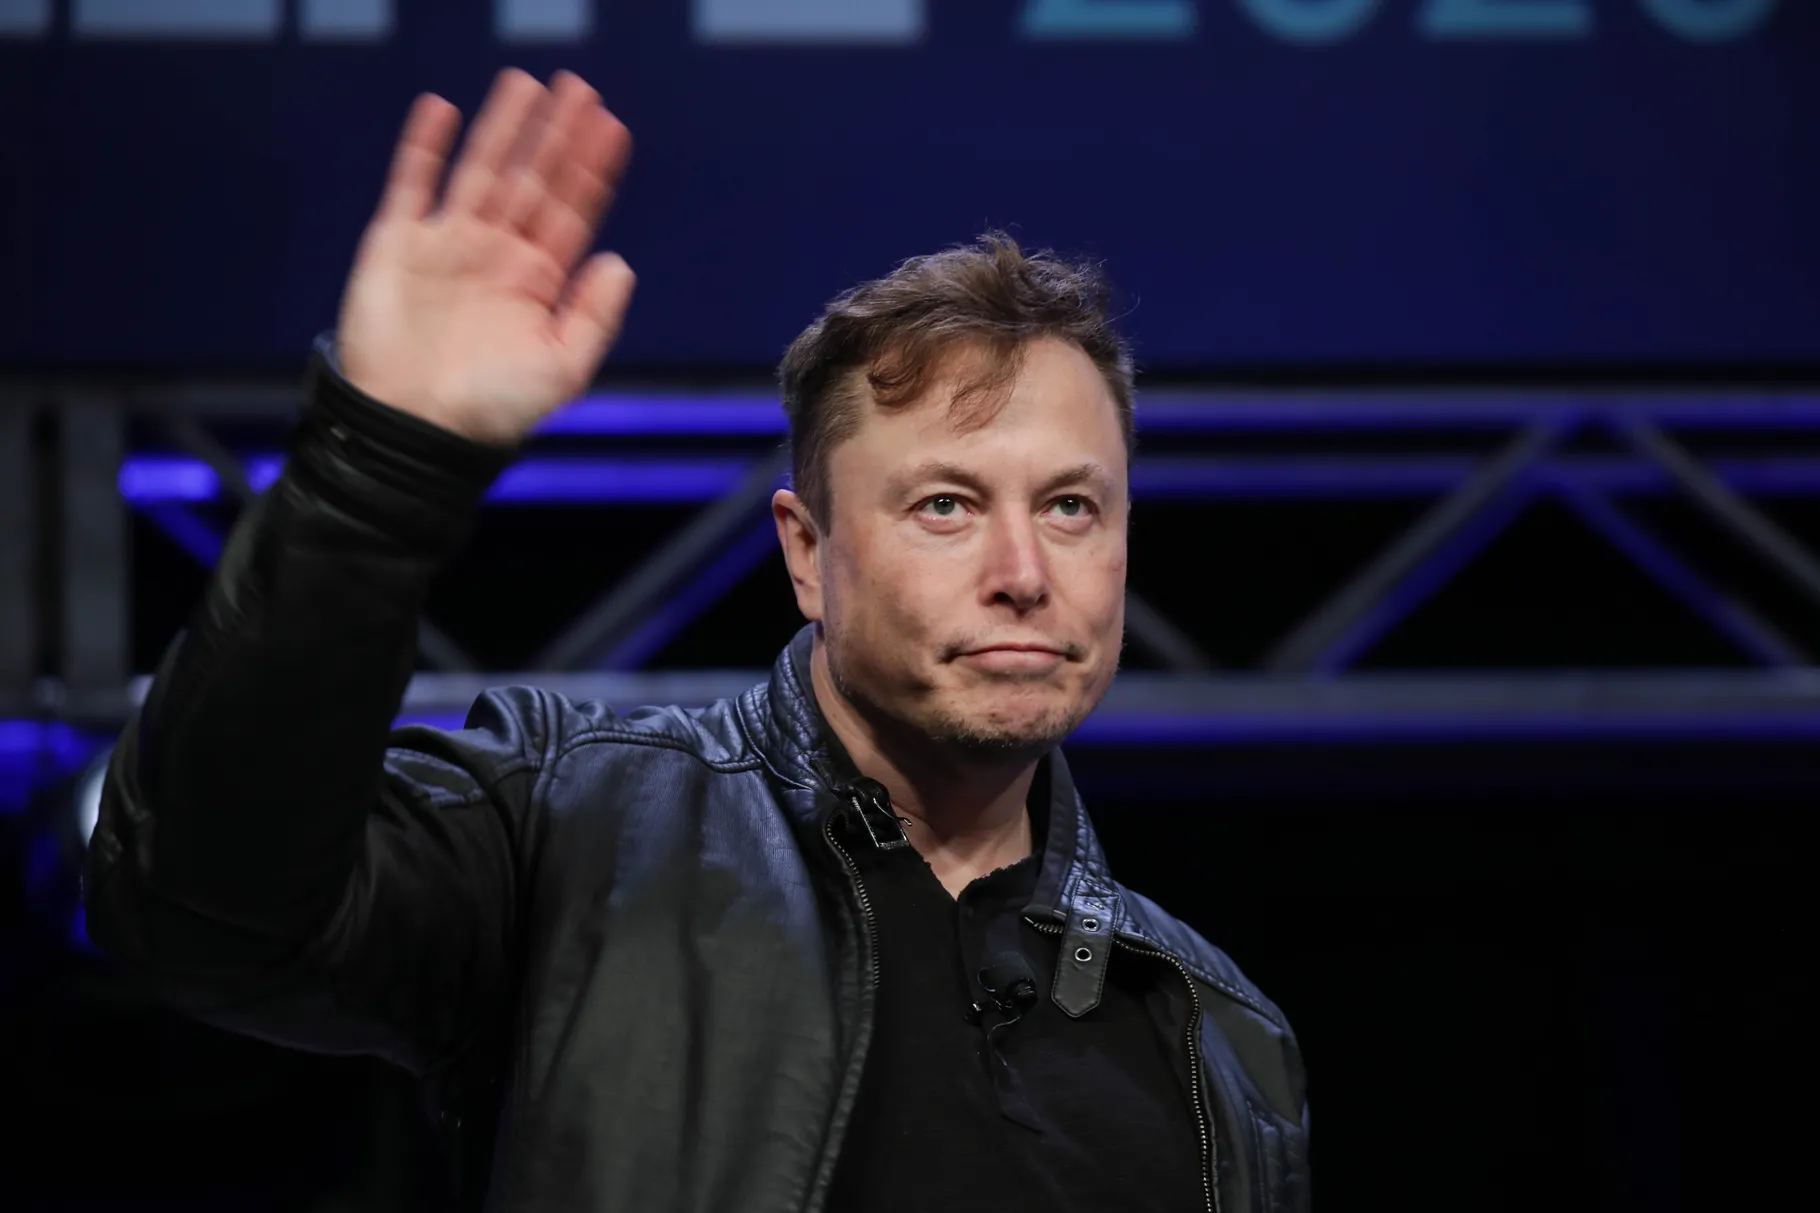 Elon Musk says a new Twitter CEO is starting in six weeks, rumors suggest NBCU's Linda Yaccarino